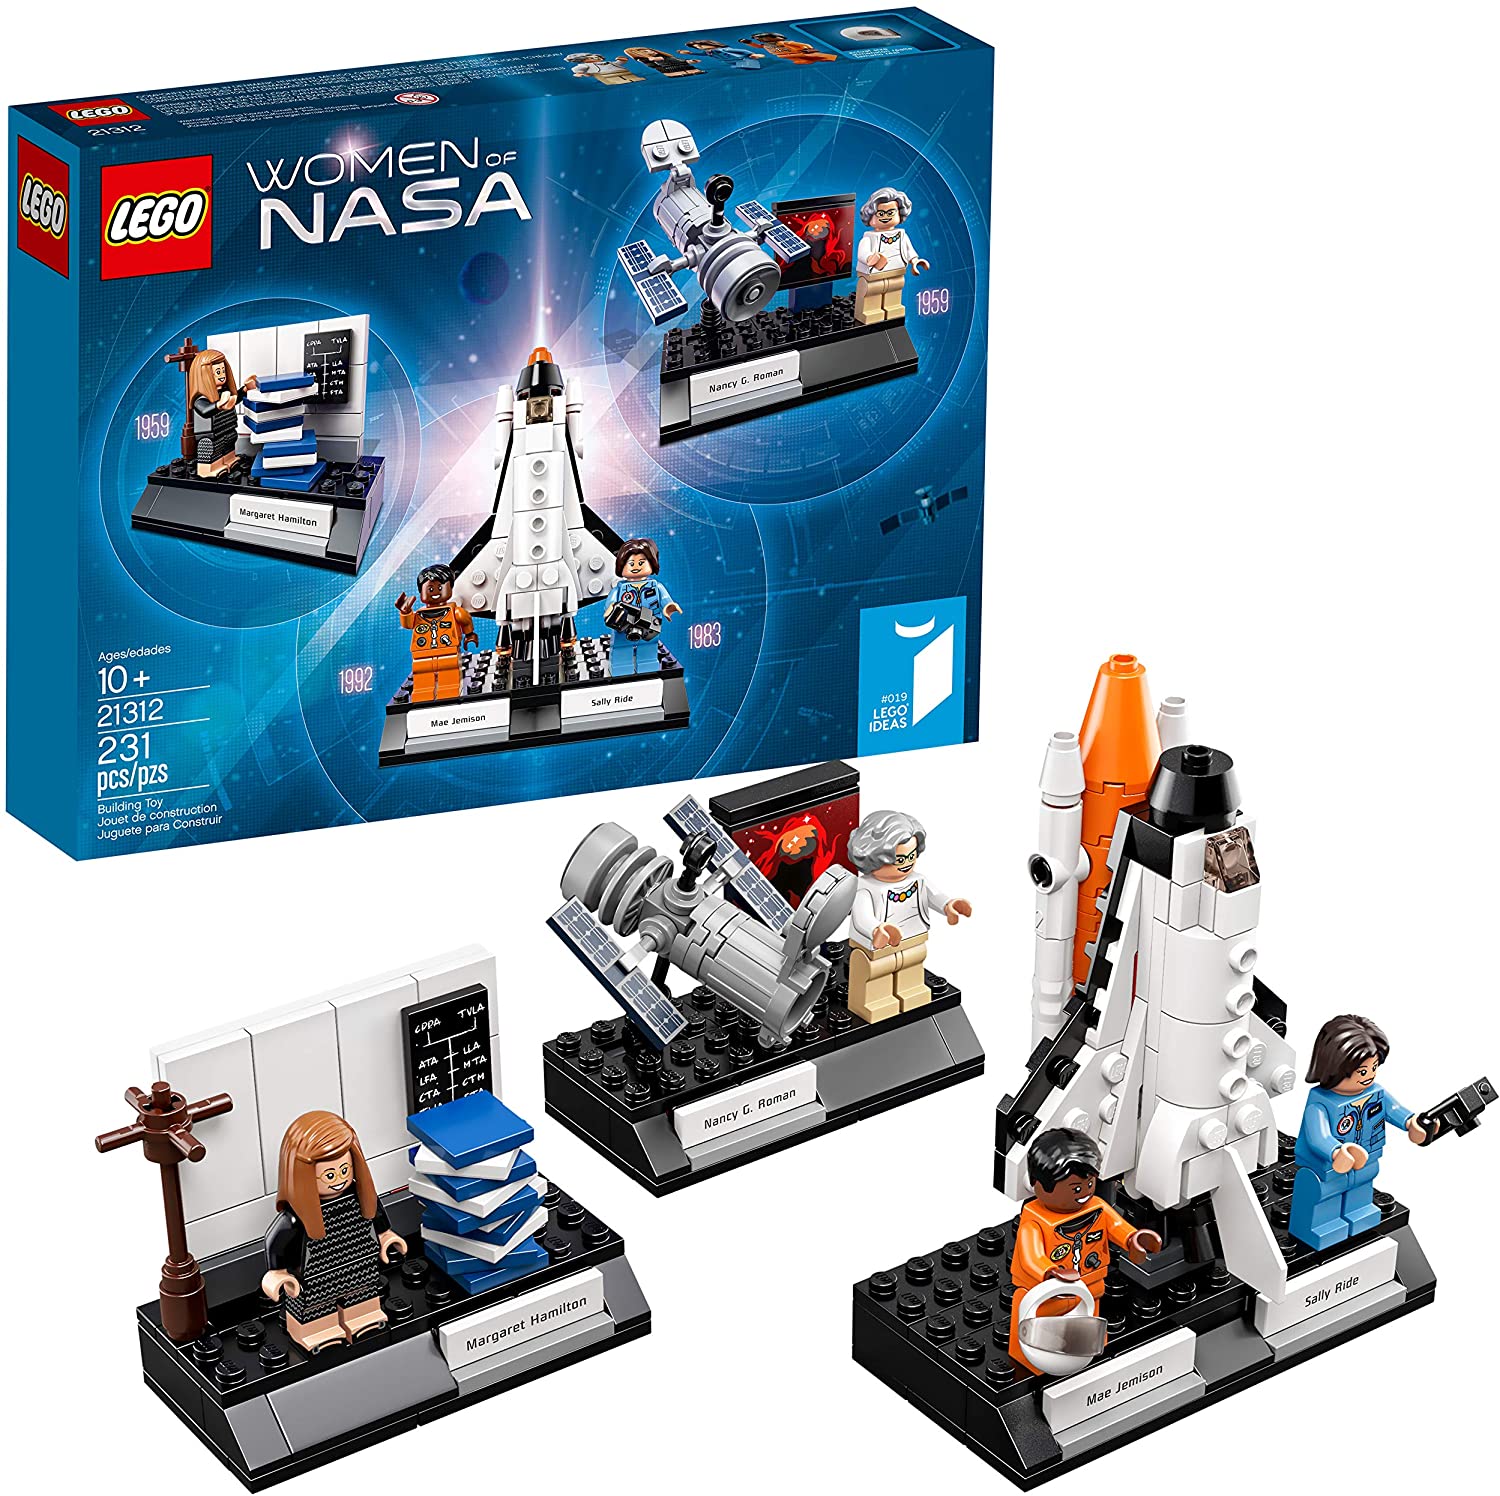 LEGO 21312 IDEAS #019 WOMEN OF NASA